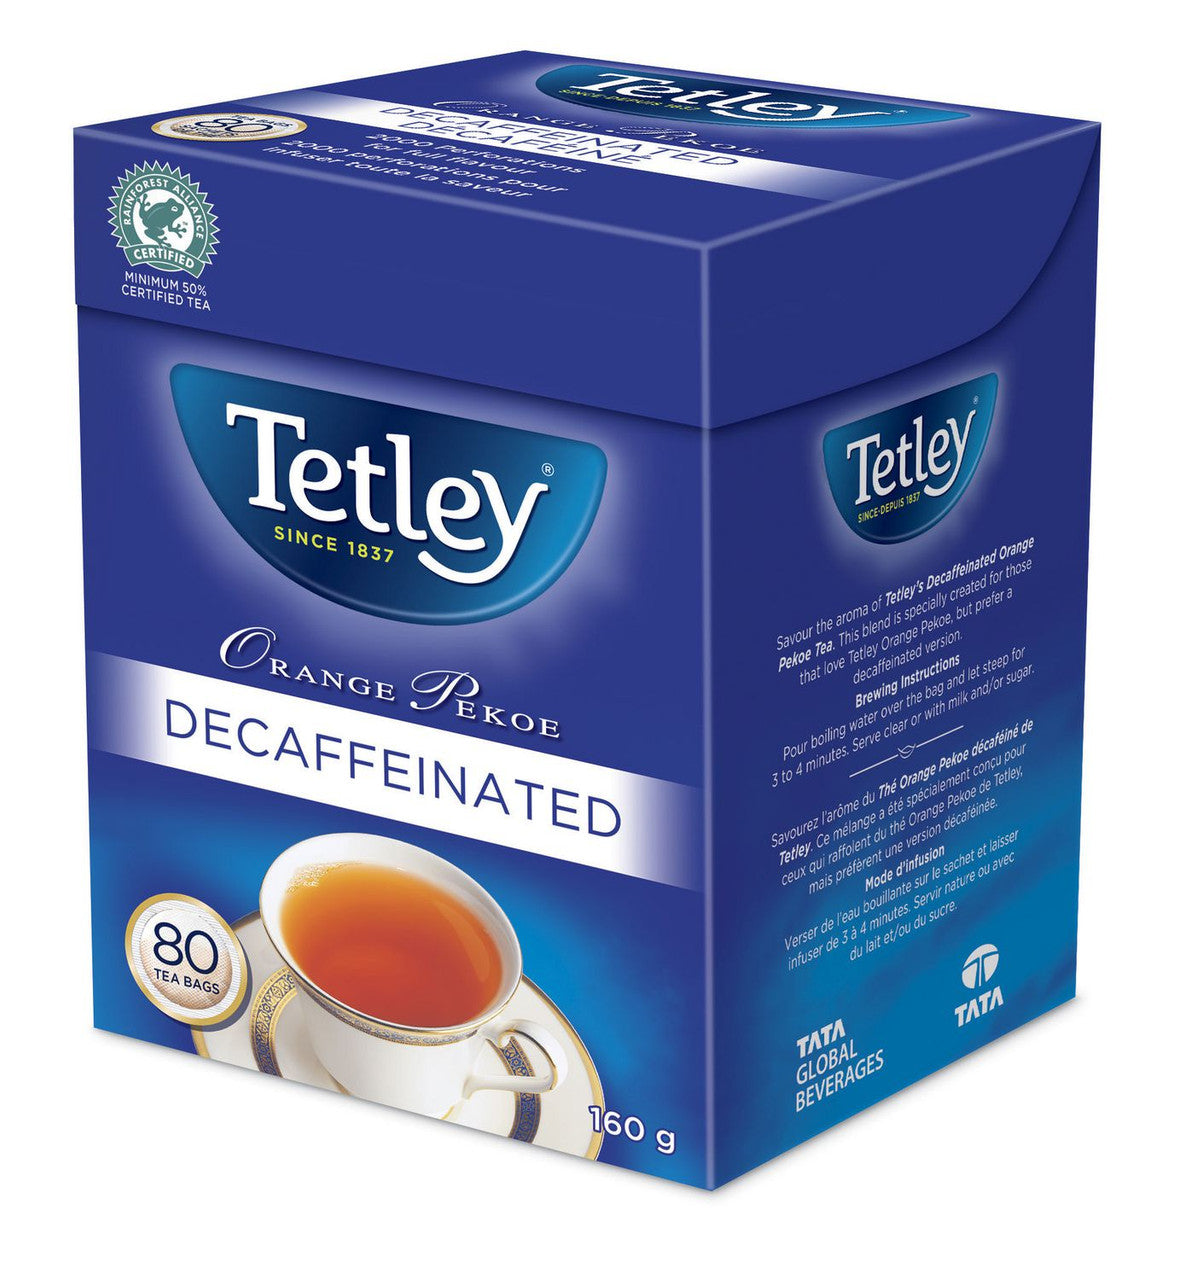 Tetley Orange Pekoe Decaffeinated Tea, 80 Tea Bags, 160g/5.6oz., (6 Pack) {Imported from Canada}